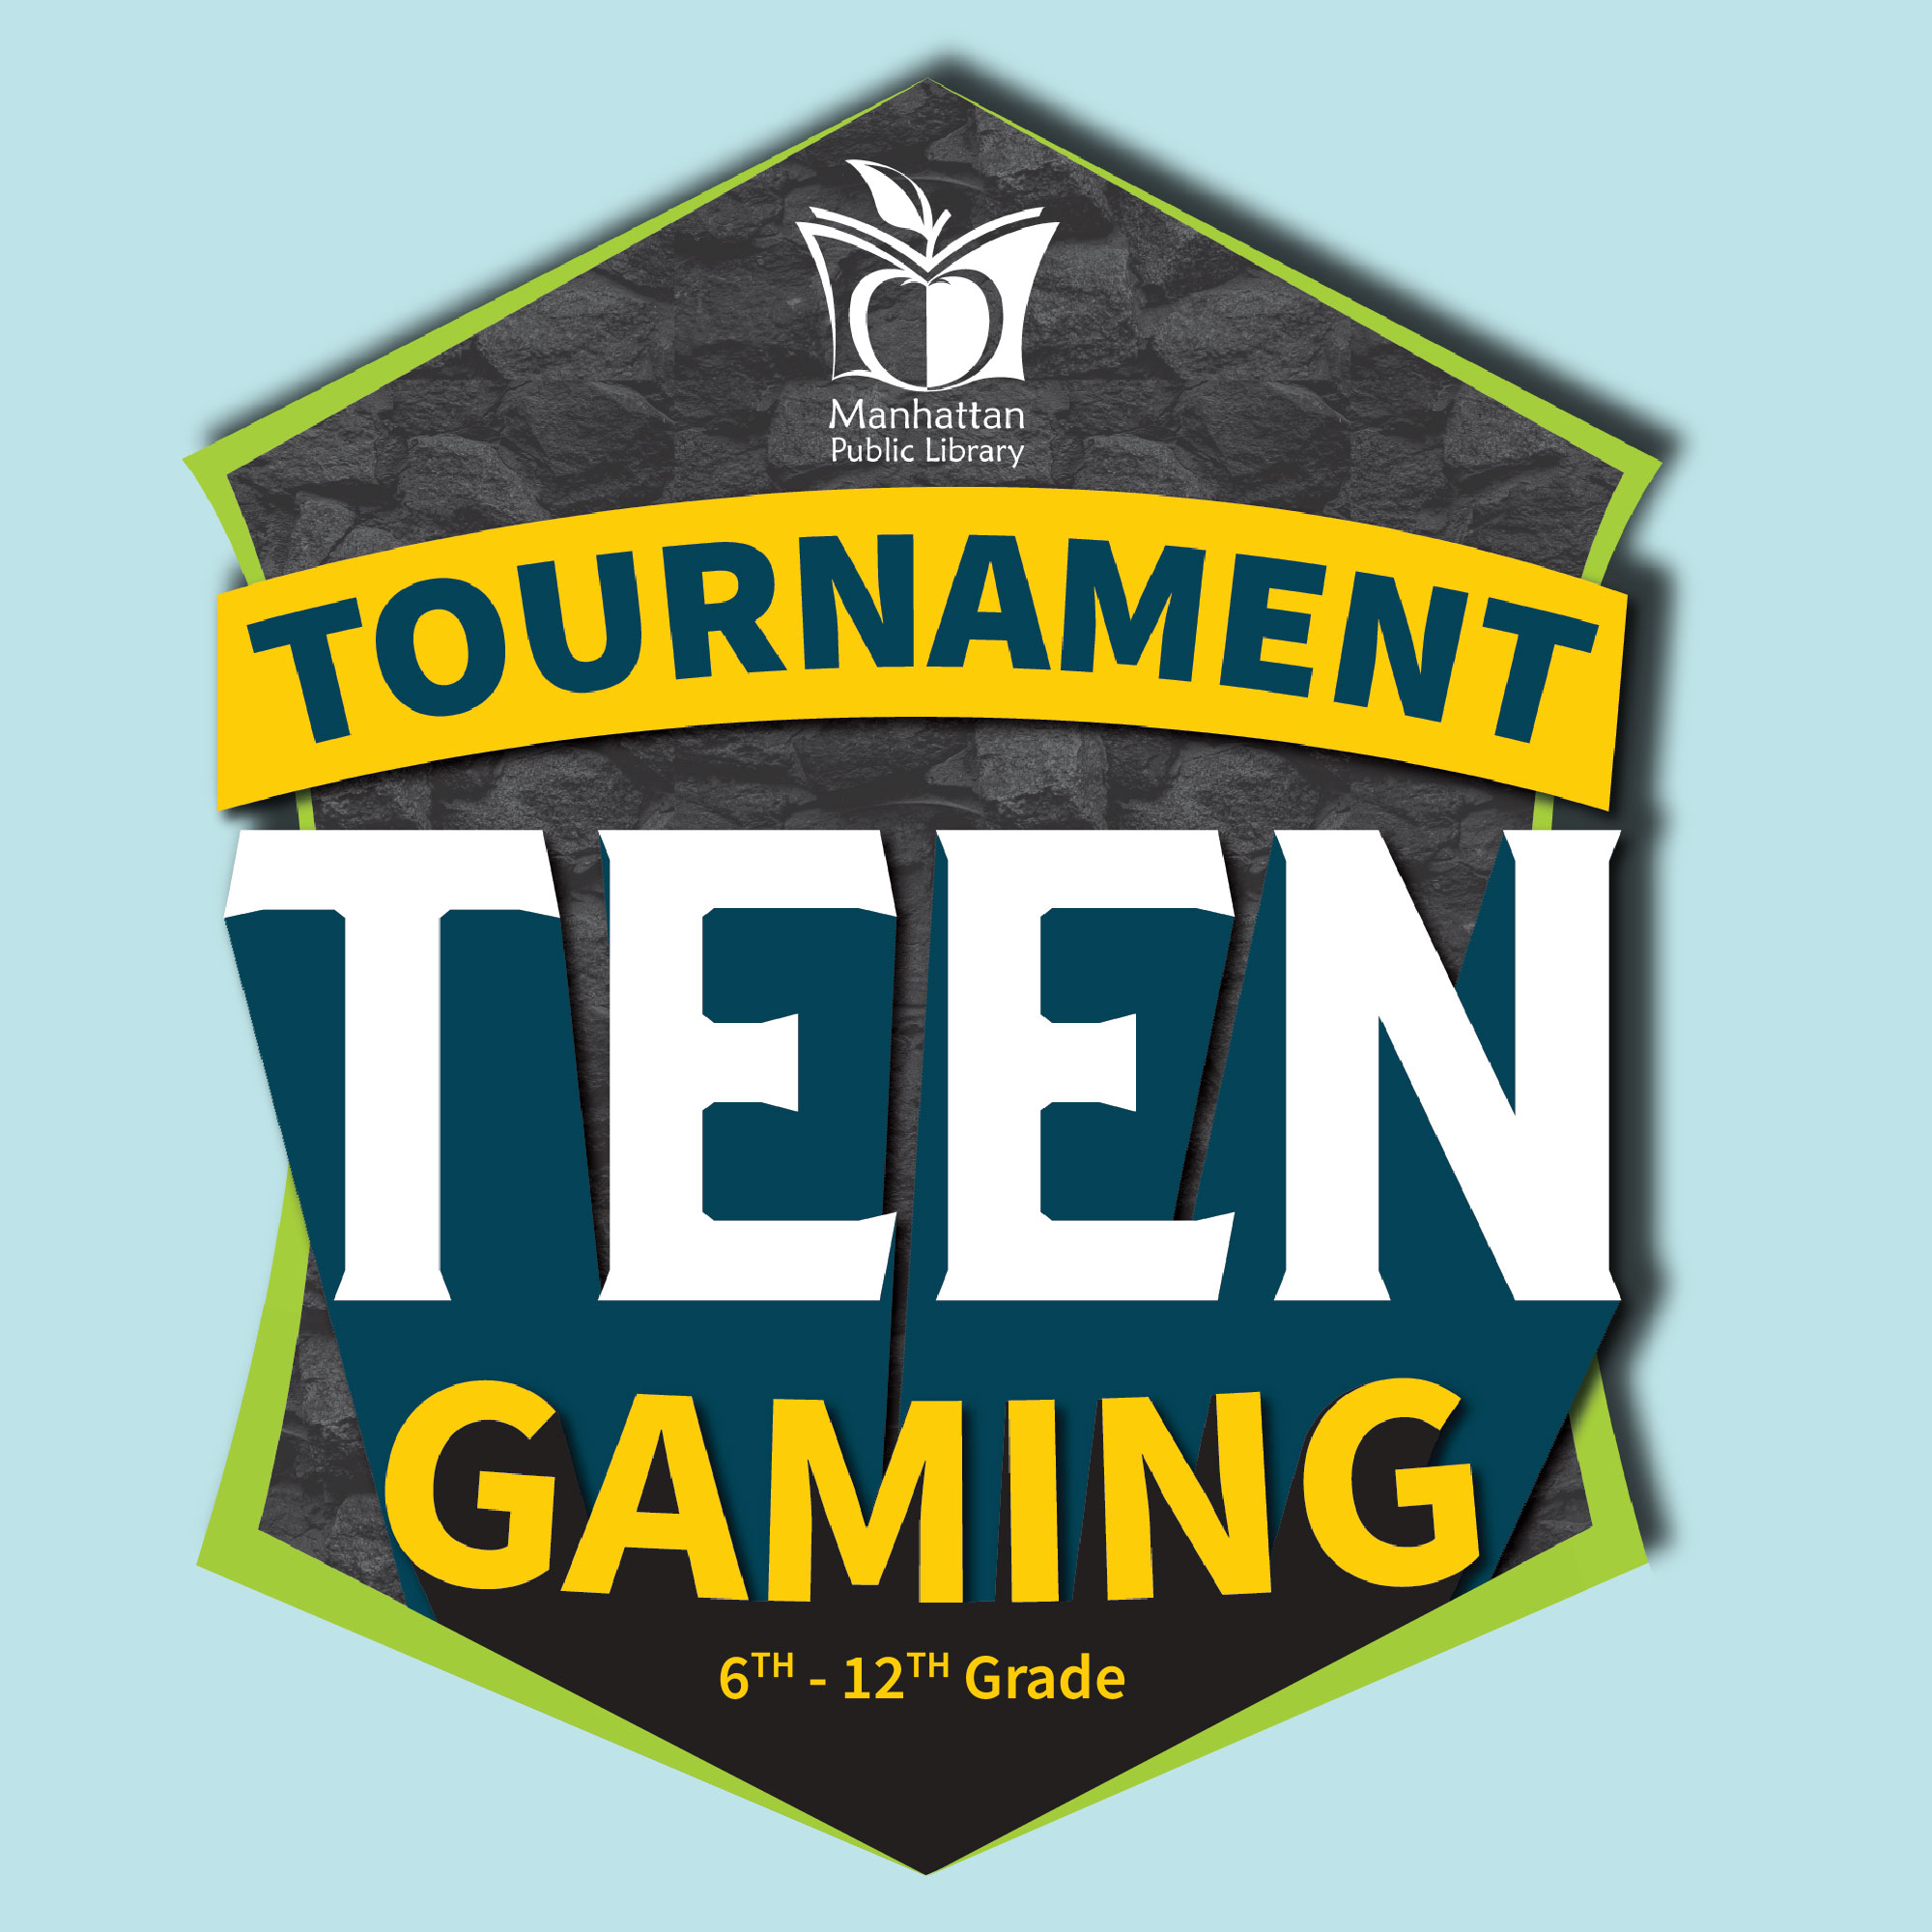 Teen Gaming Tournament